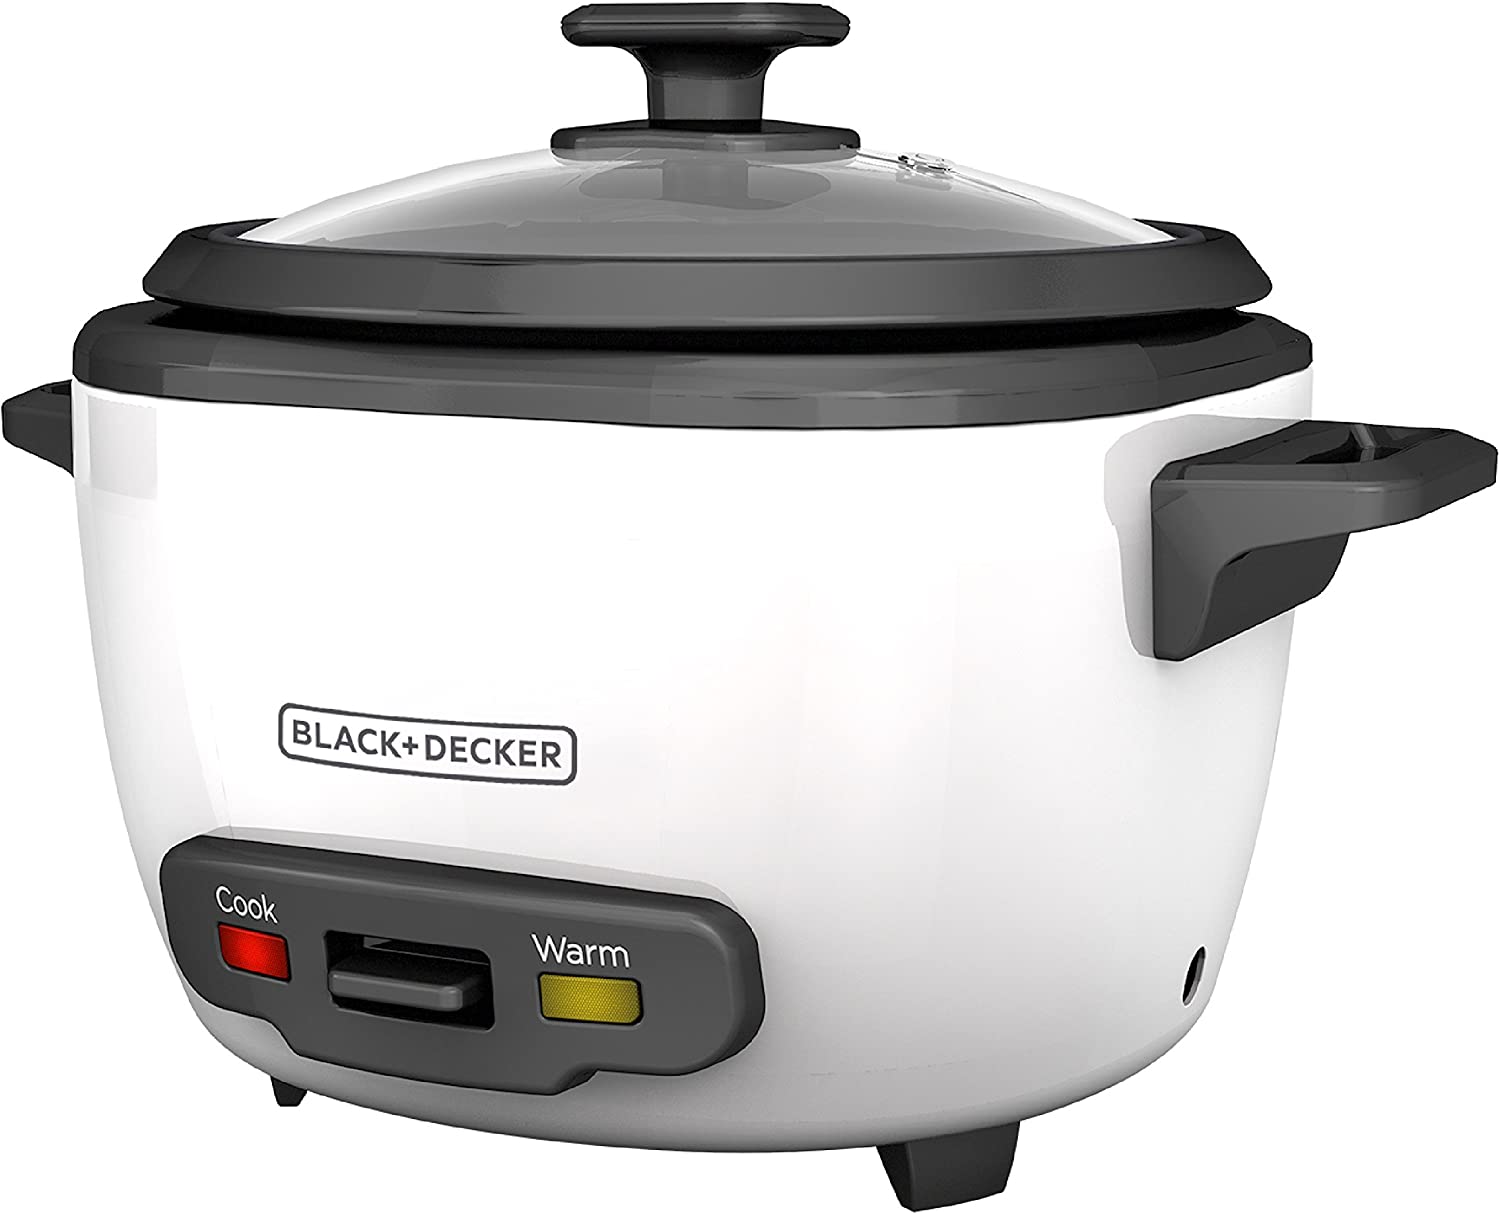 https://www.simplemost.com/wp-content/uploads/2022/08/blackdecker-rice-cooker.jpg